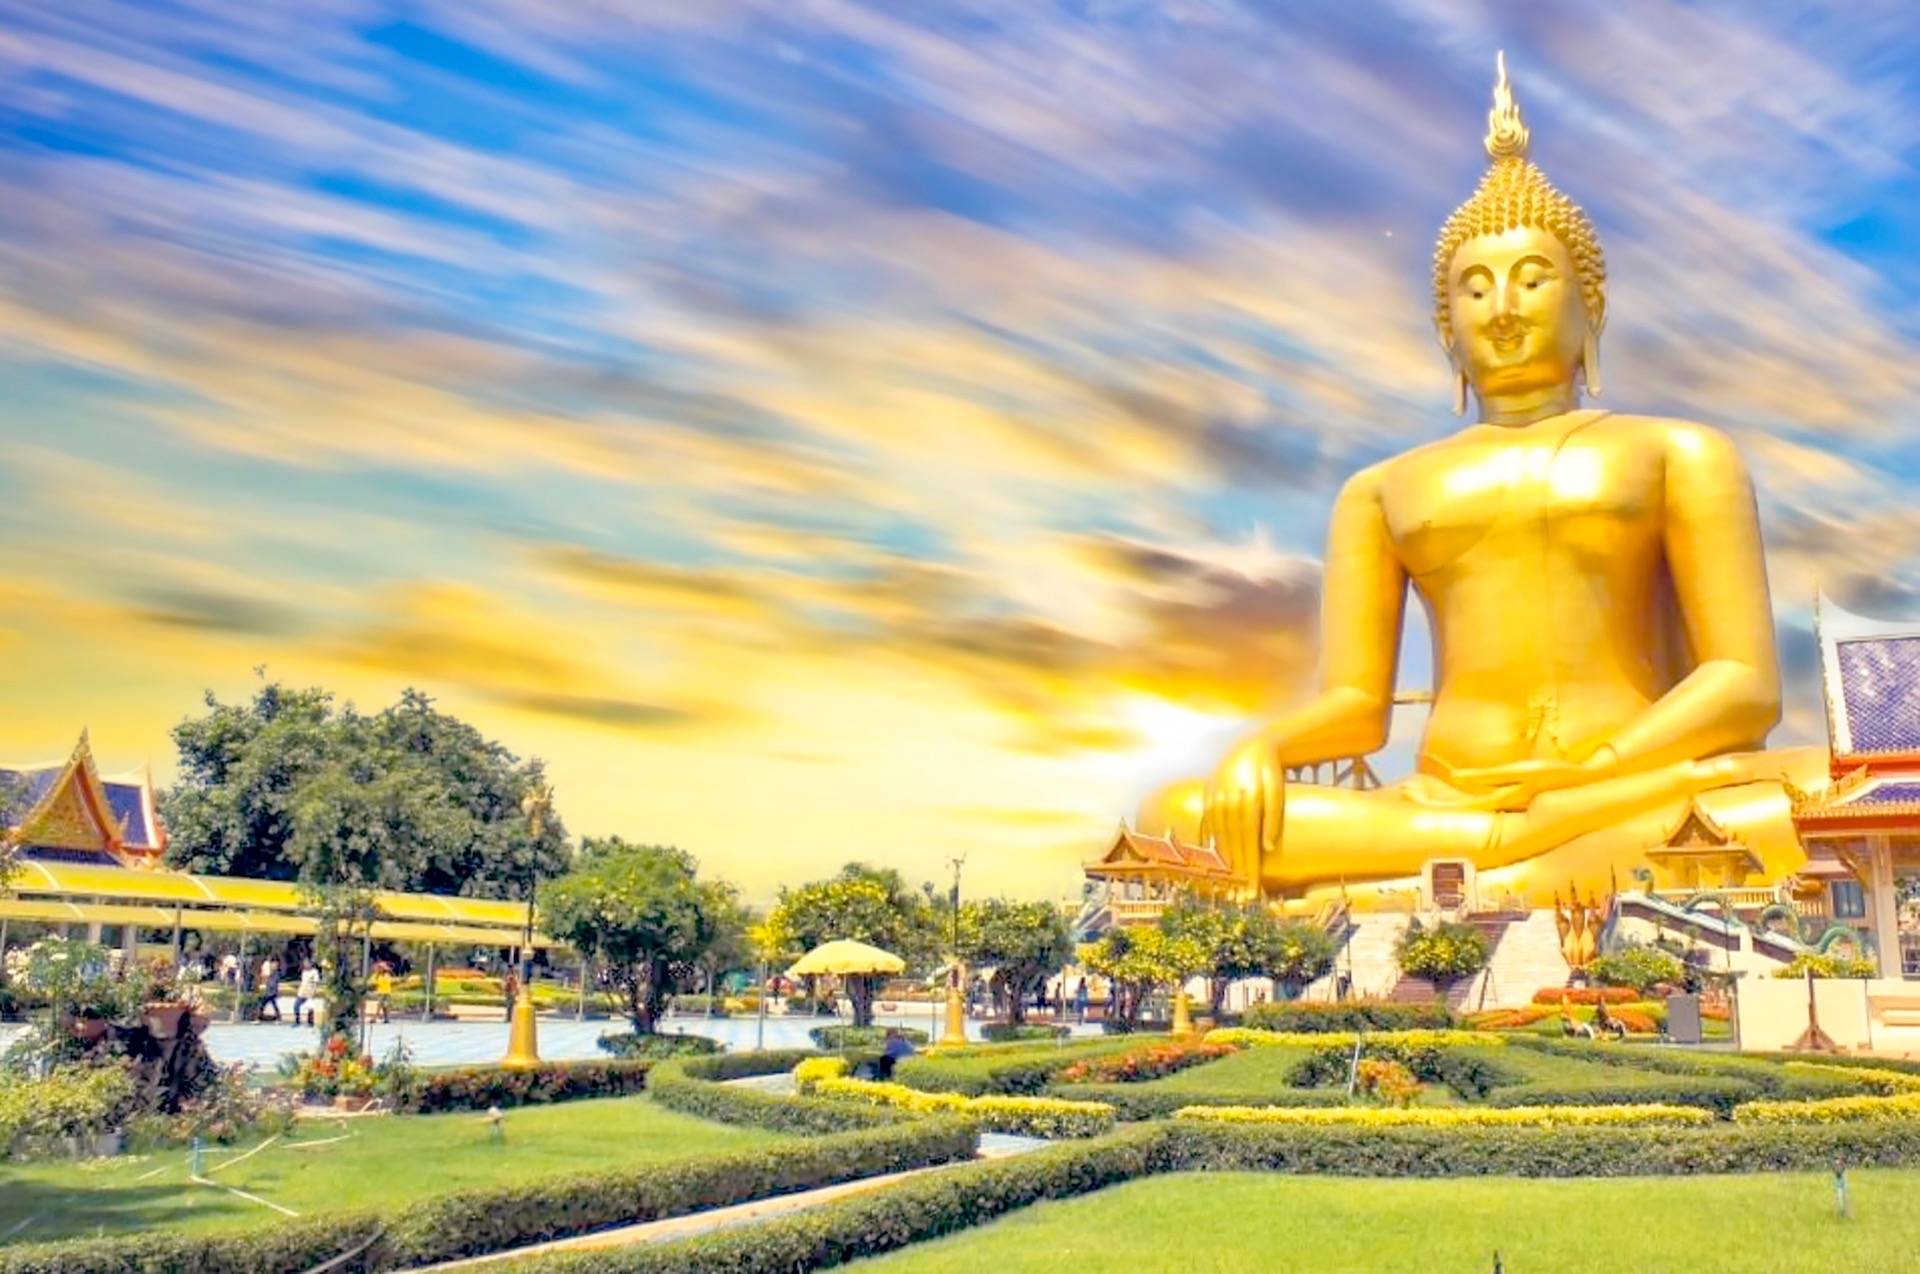 Wat Muang - “Golden Buddha” Temple Ang Tong and more in Thailand!